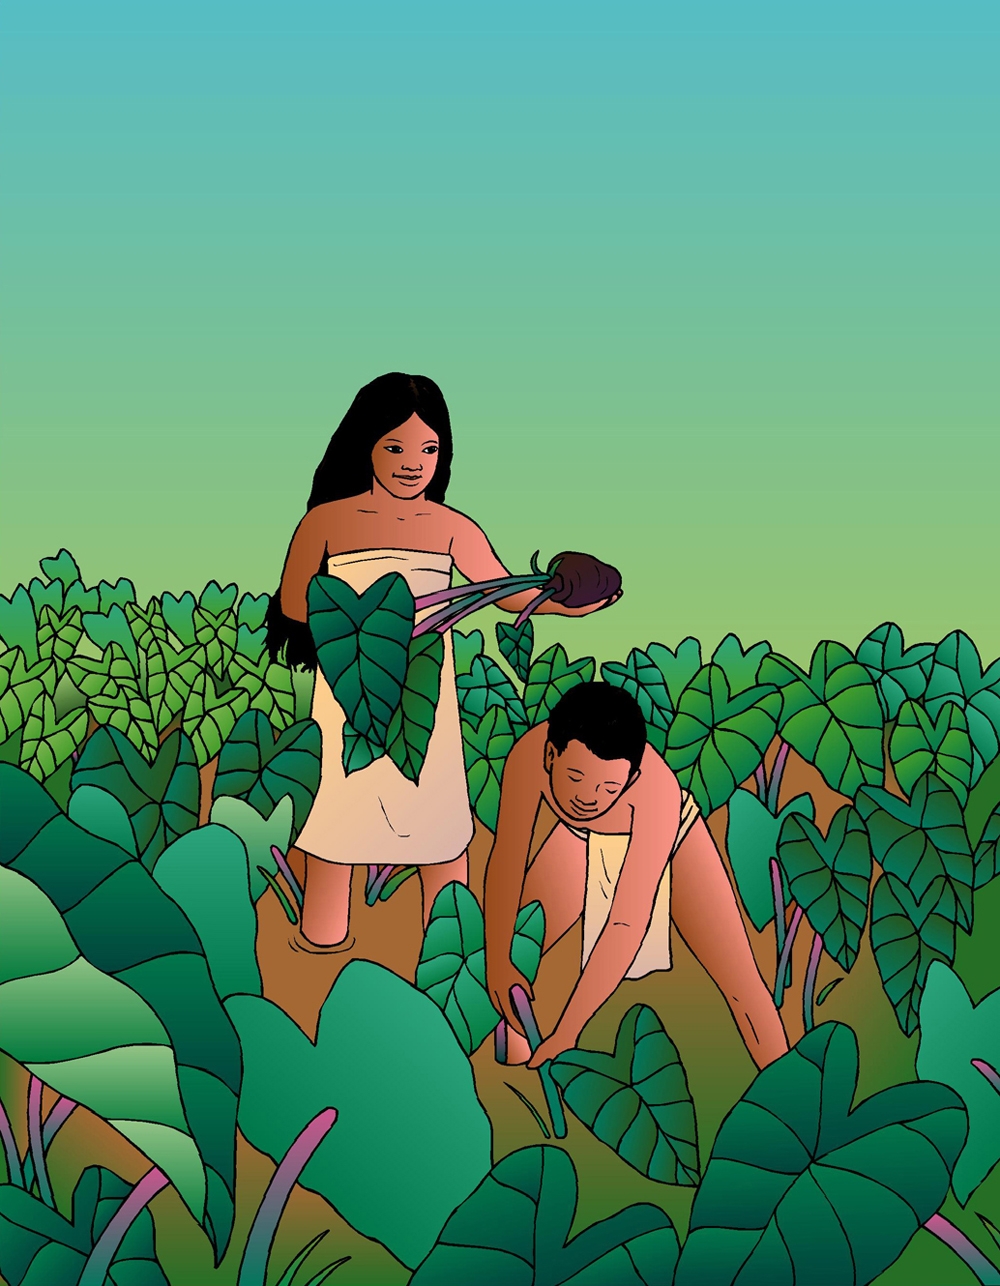 [Harvesting kalo] Artwork by R. Y. Racoma.